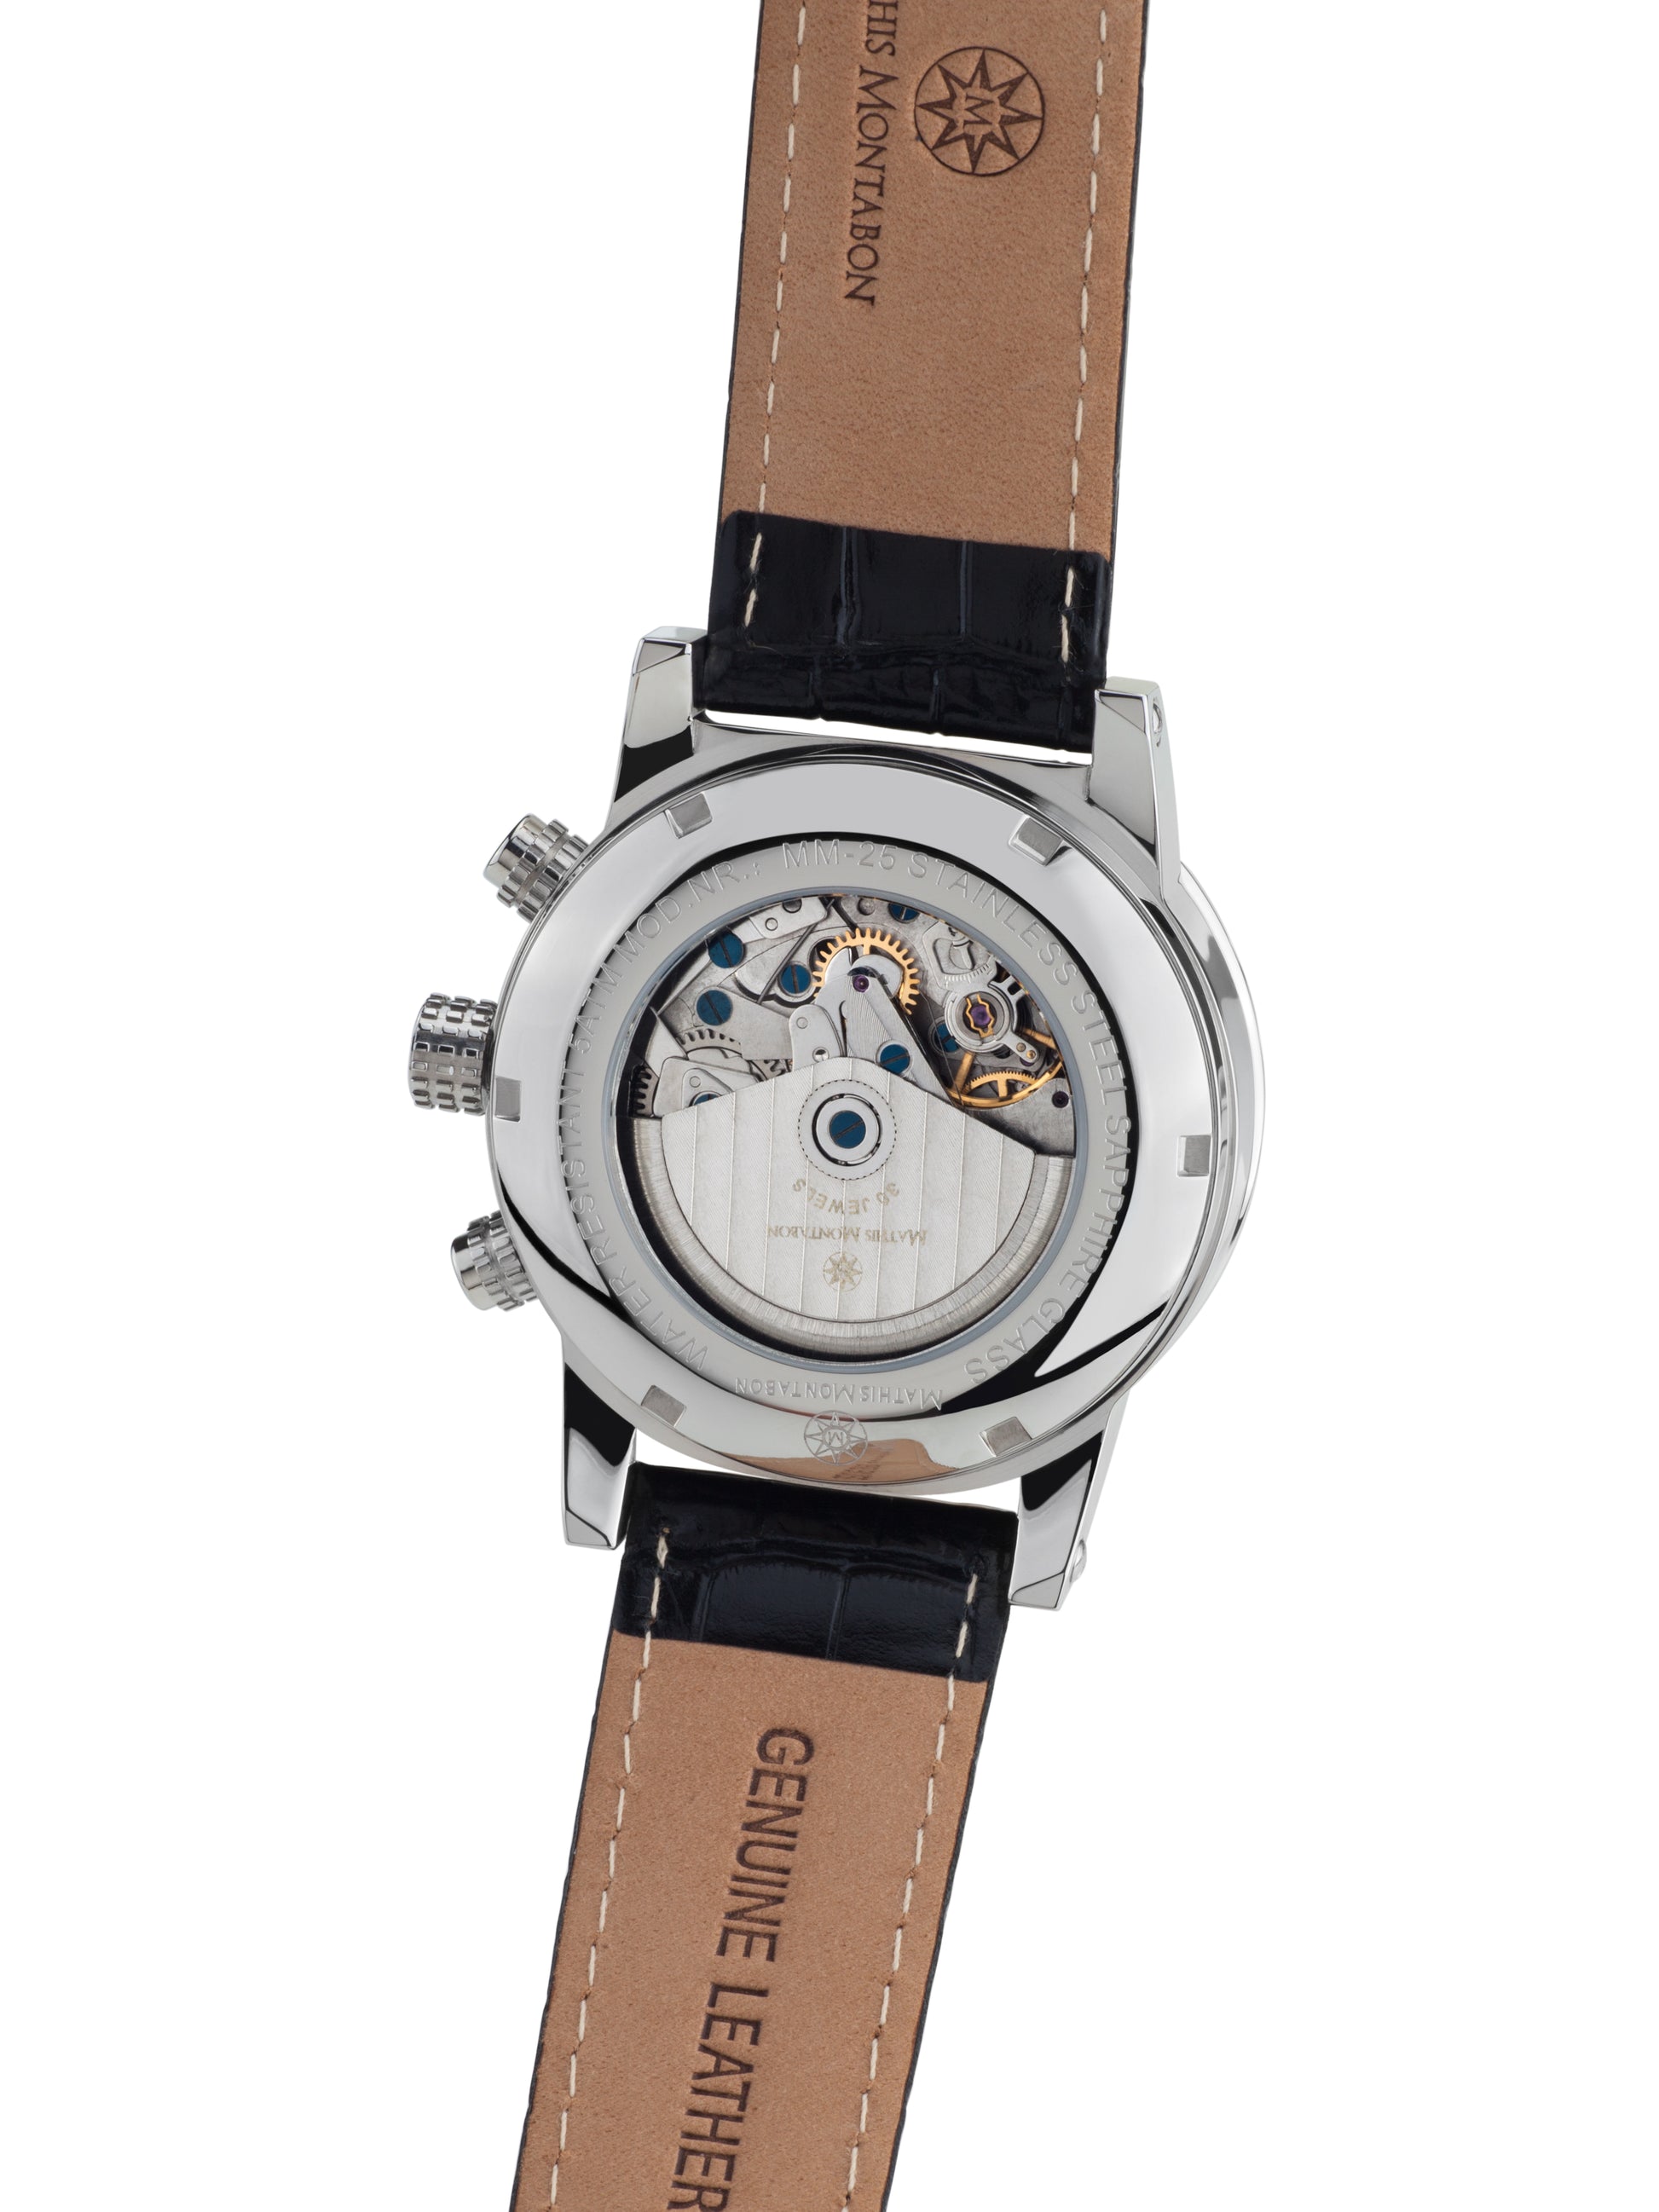 Automatic watches — Le Chronographe — Mathis Montabon — schwarz